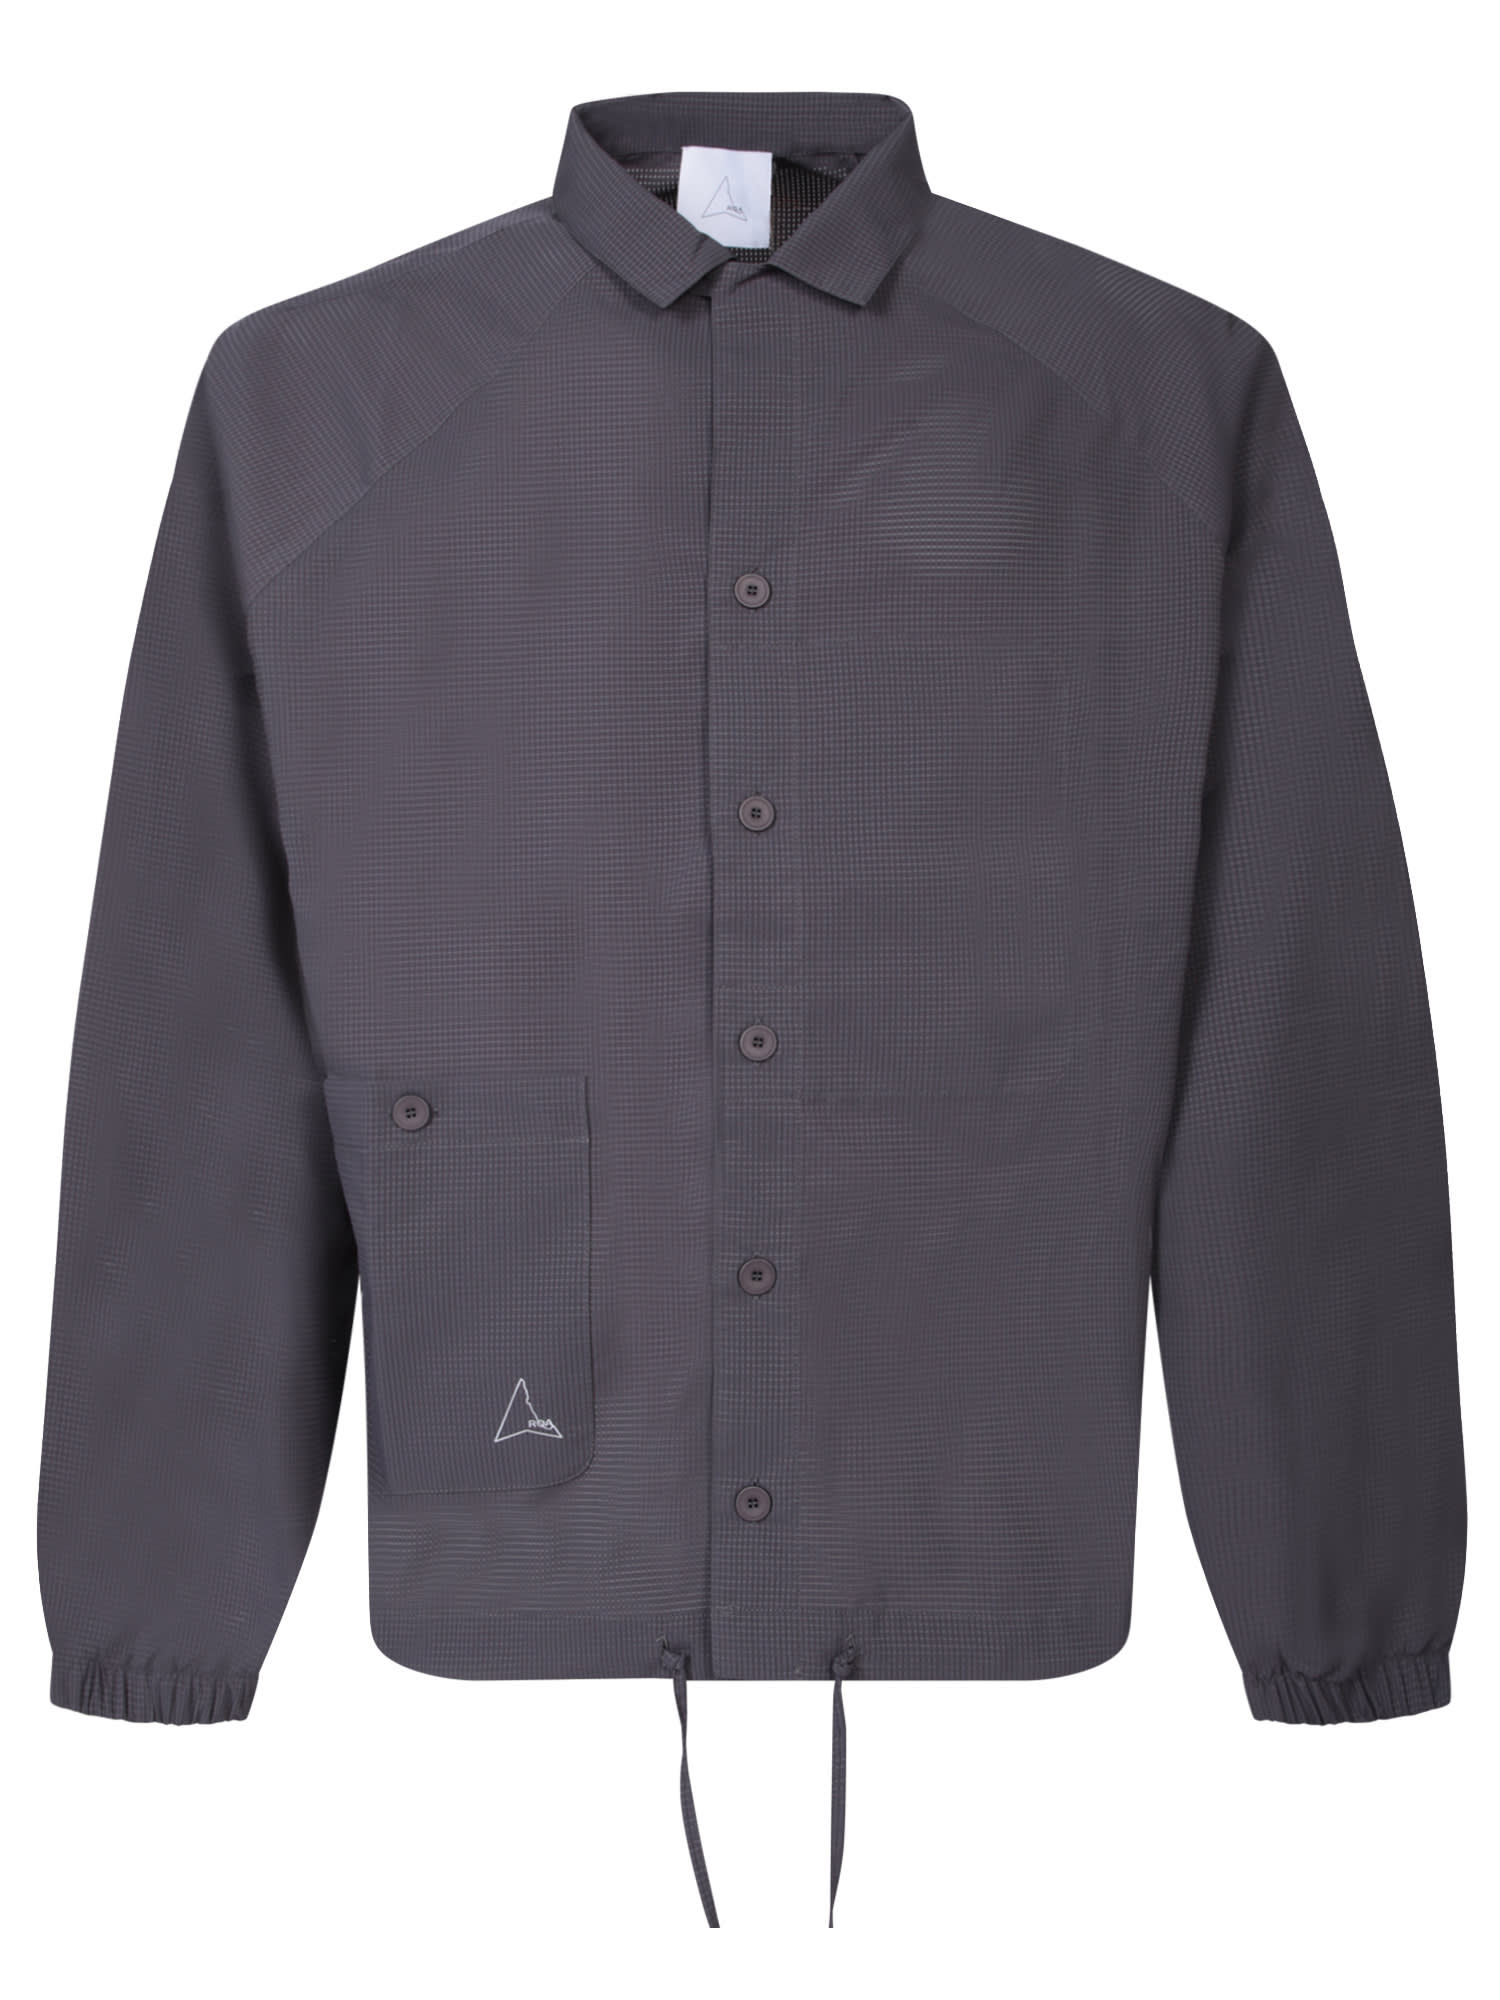 Shop Roa Perforated Grey Shirt